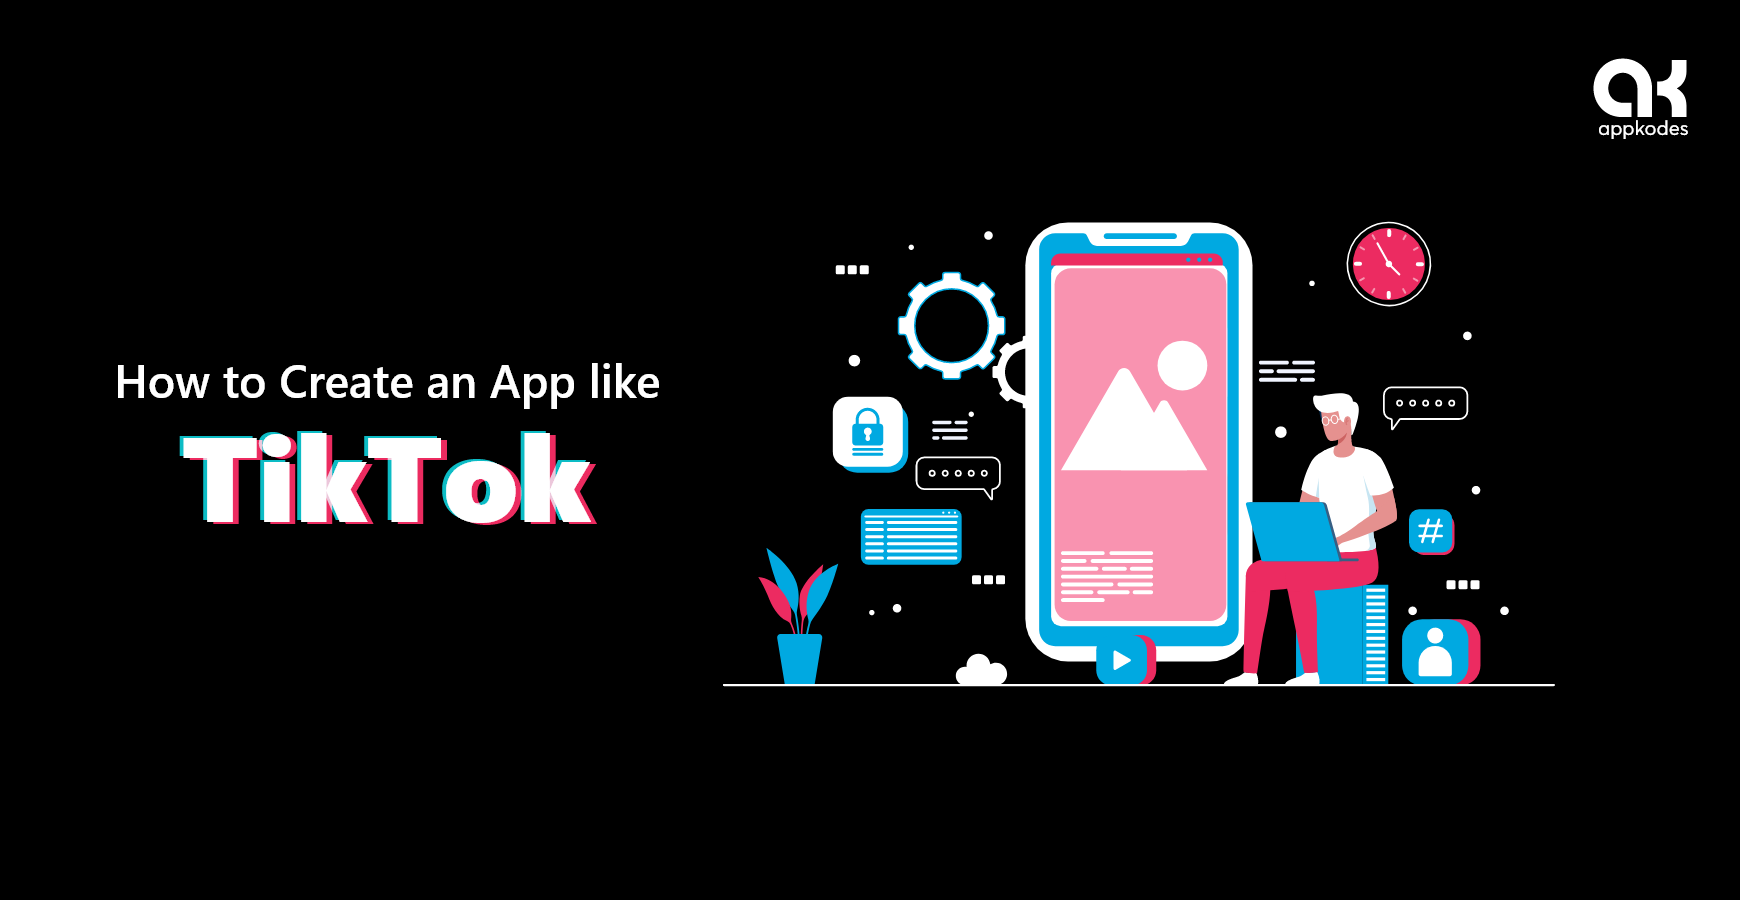 How to create an app like TikTok